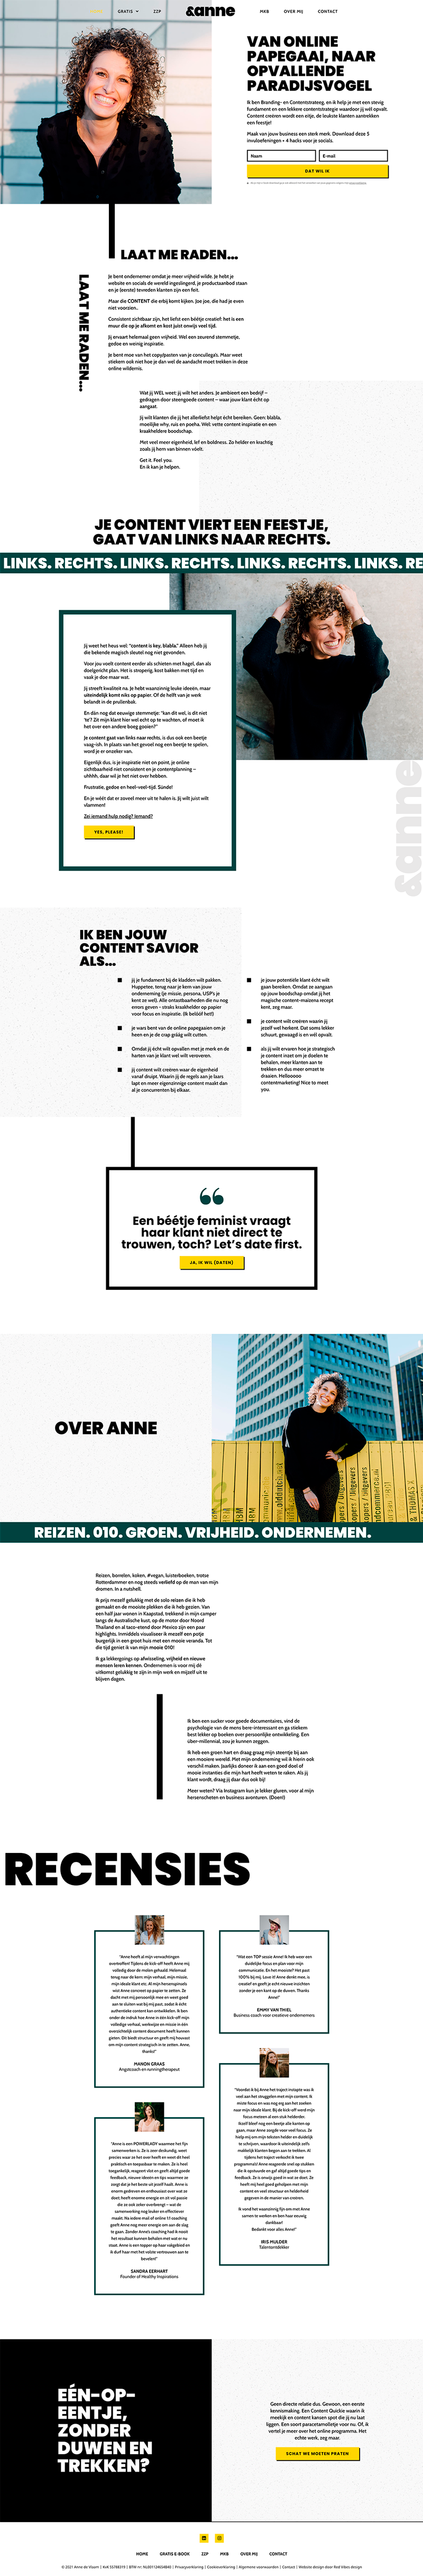 Website design Anne de Vlaam